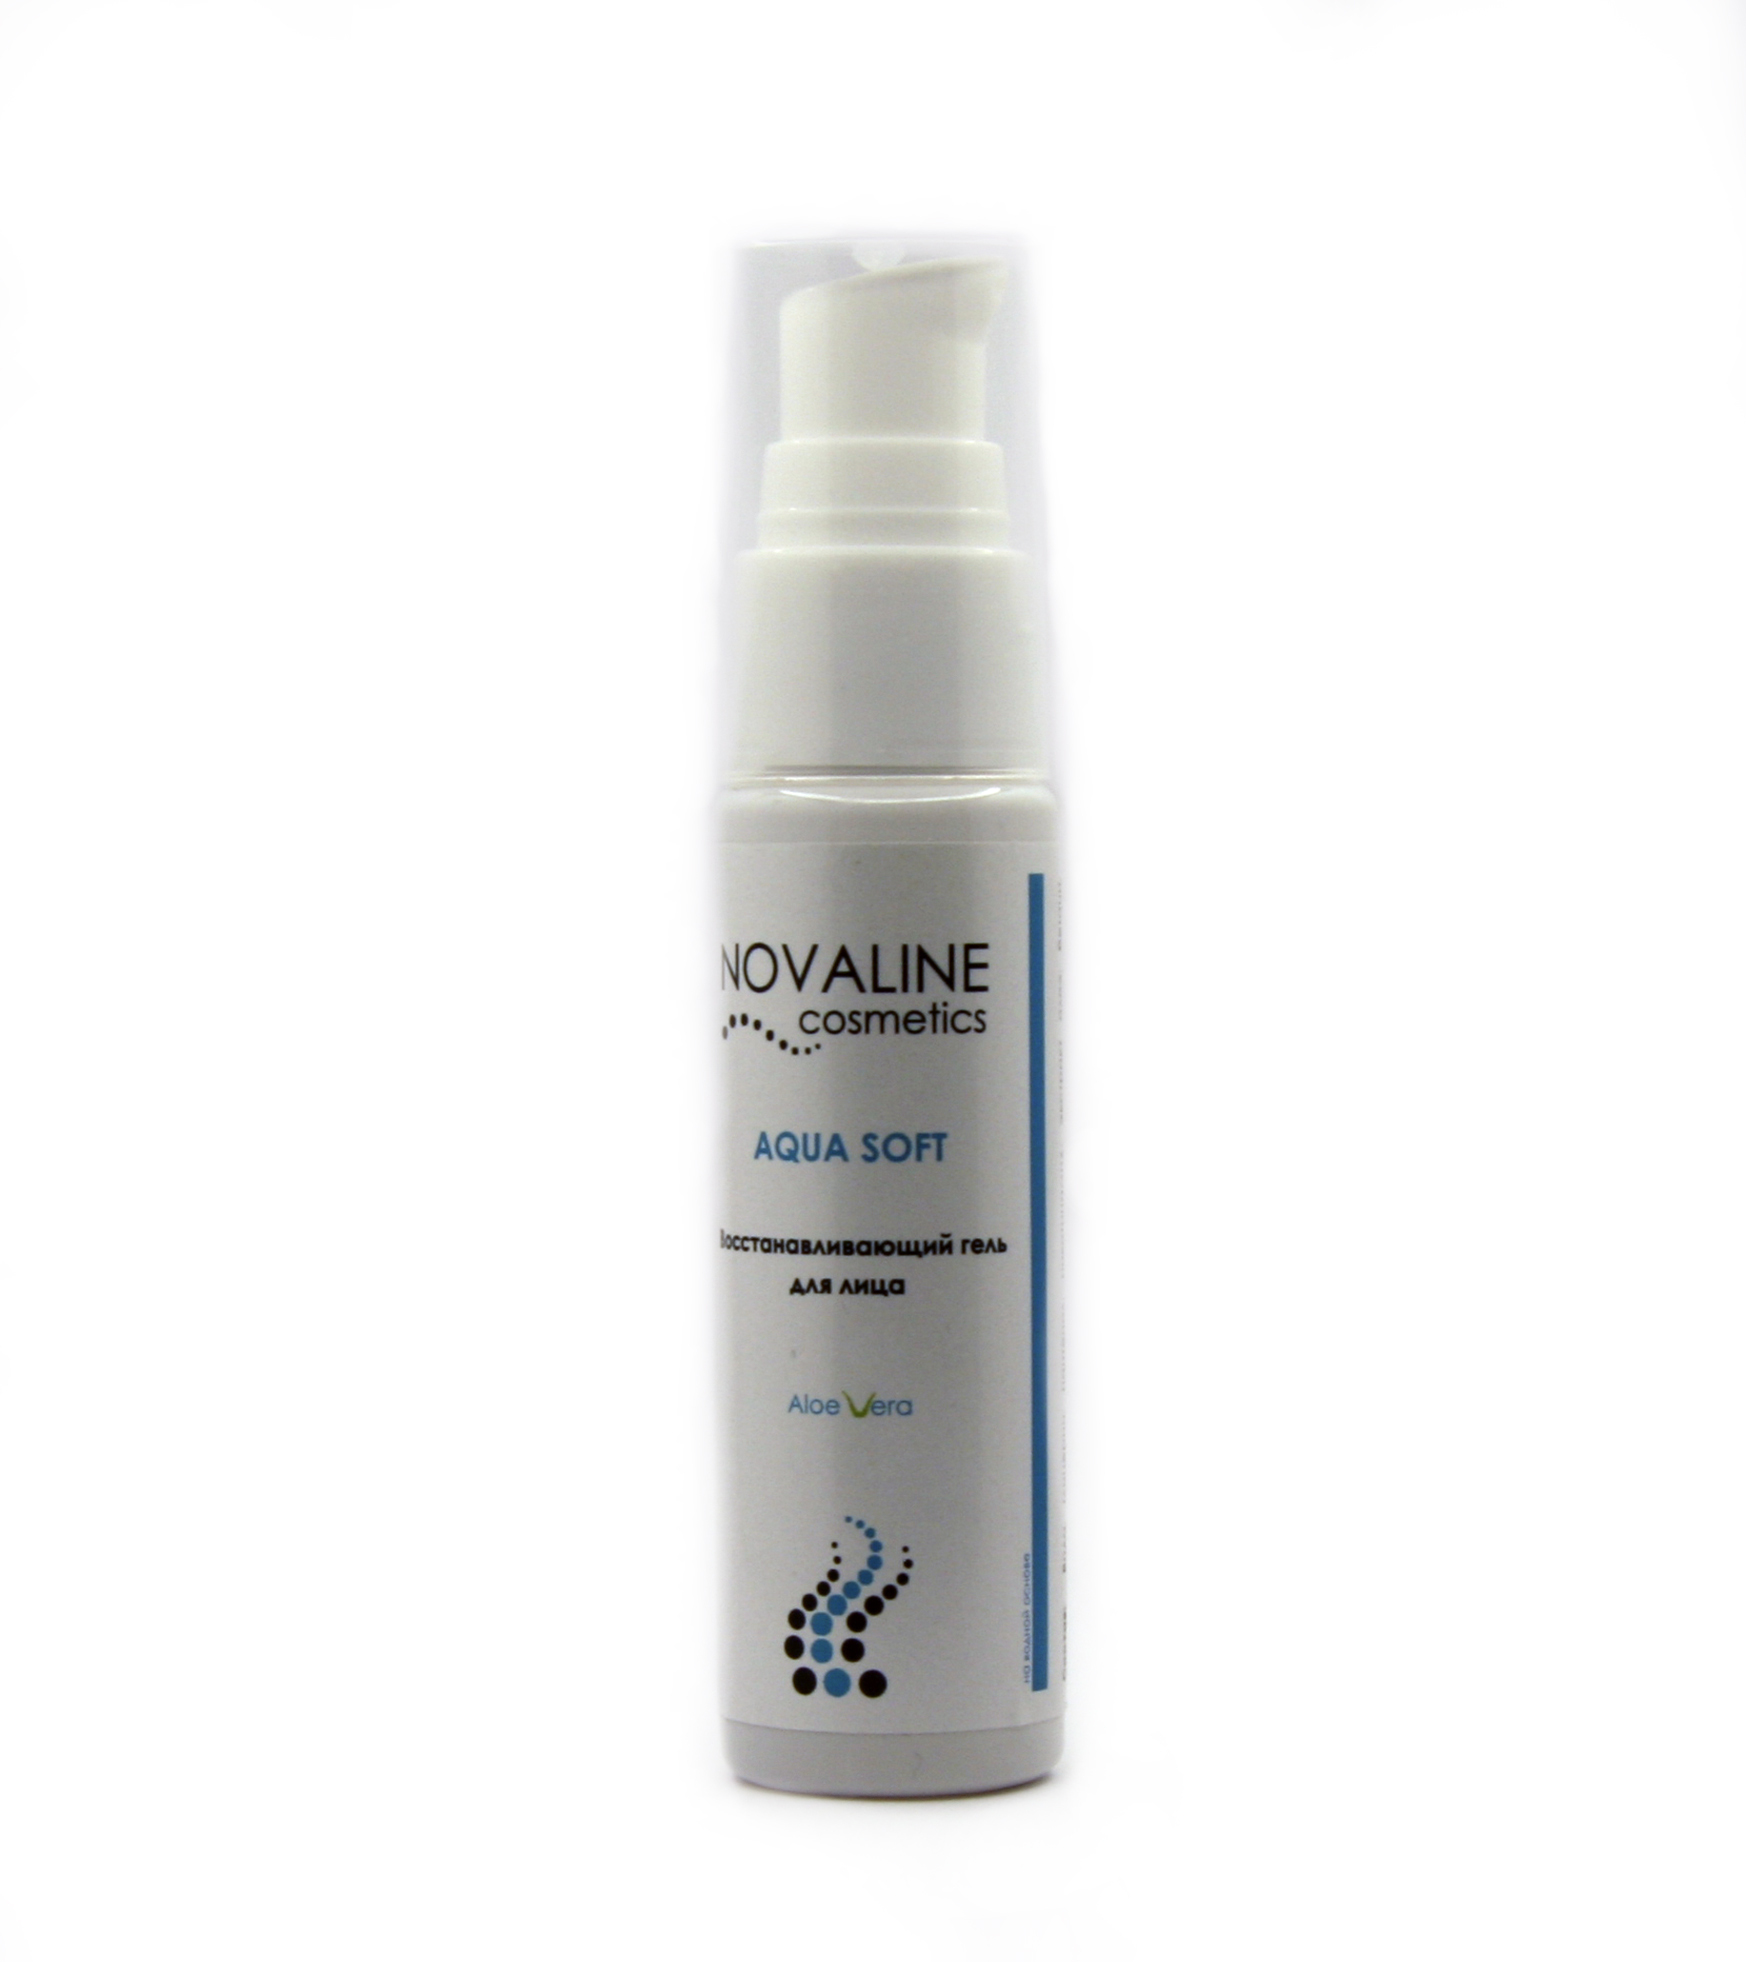 Novaline. Novline Cosmetics пилинг. Novaline Cosmetics пилинг гидрогелевый. Софт гель. Novaline Silver Skin гидрогелевая маска пилинг.